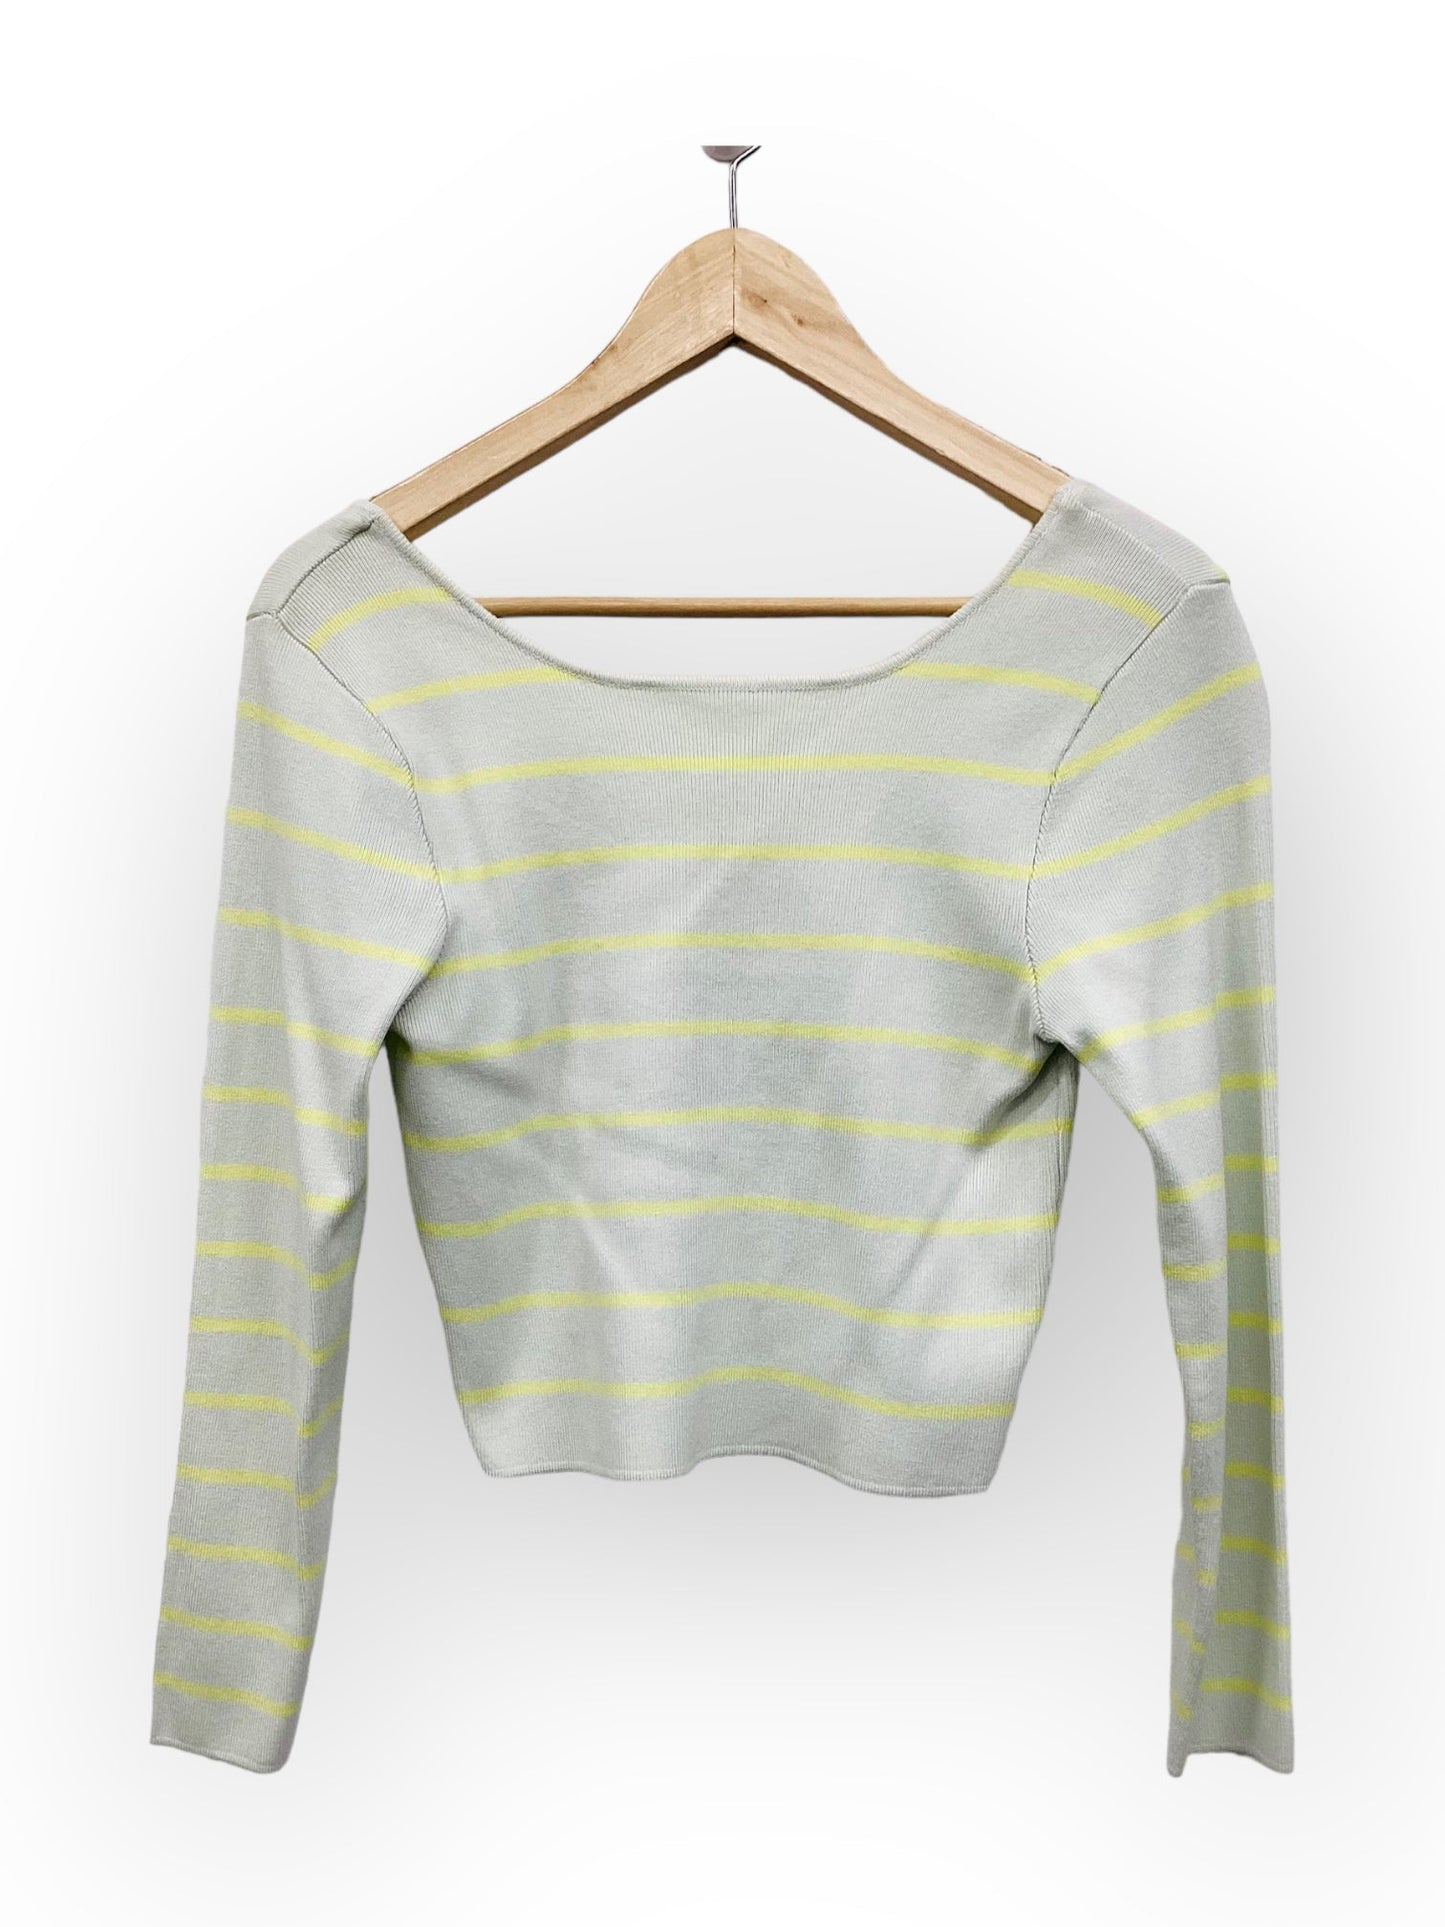 Top Long Sleeve By Zara Size: L